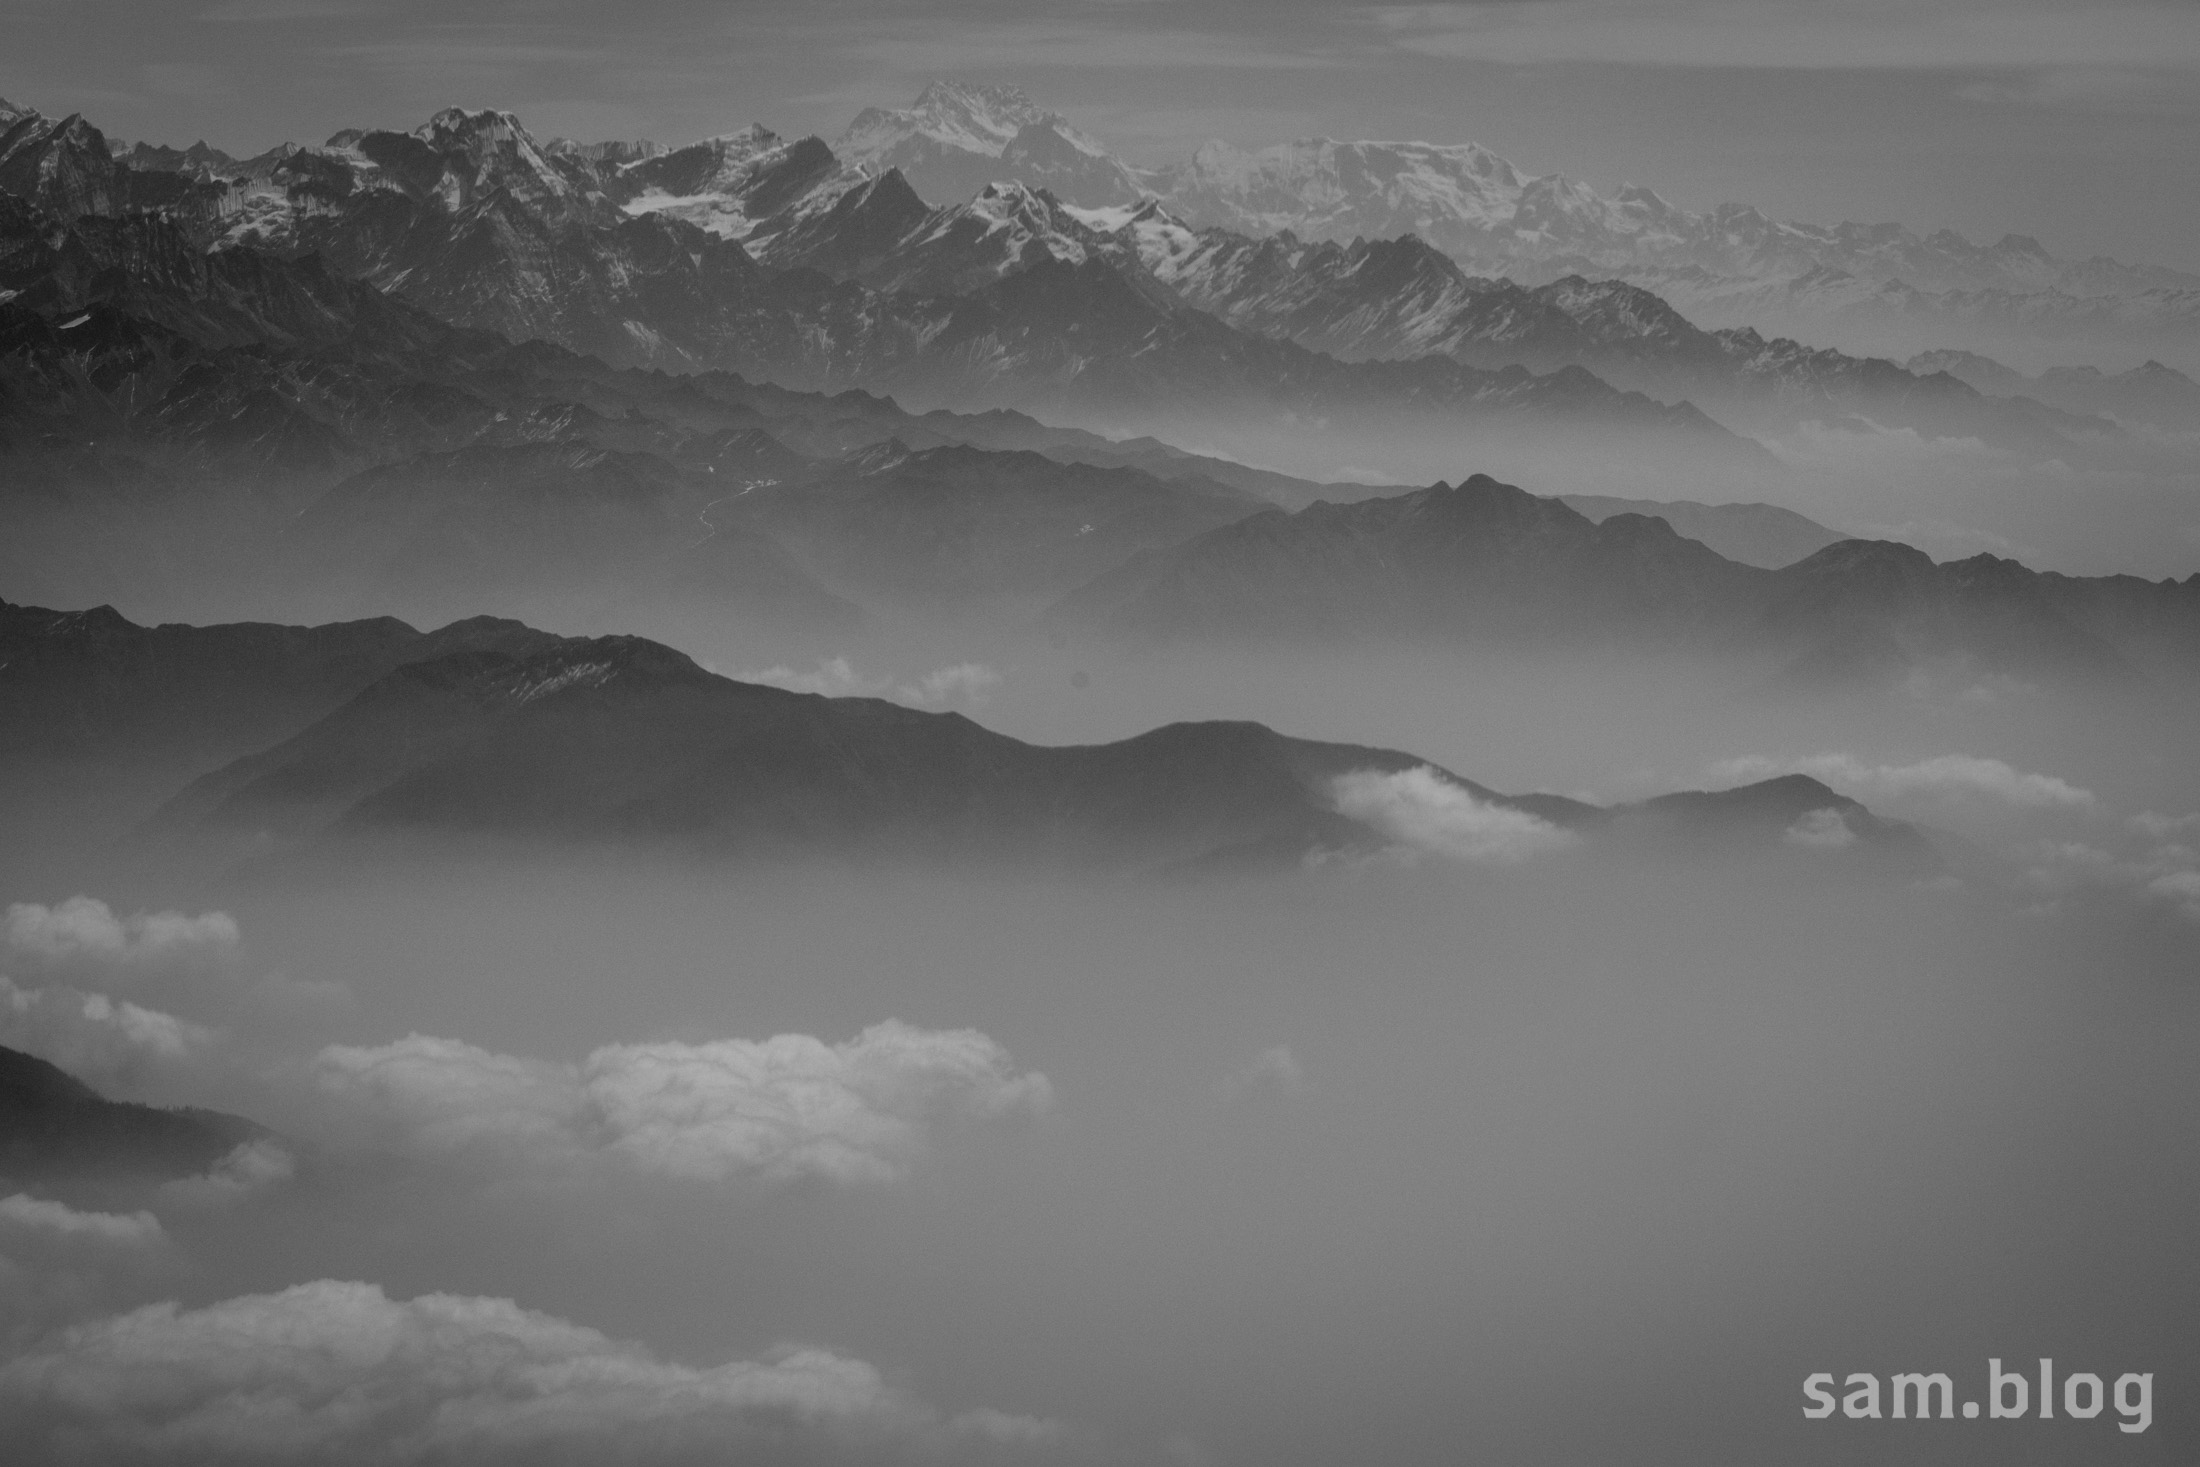 Himalayas Emerging